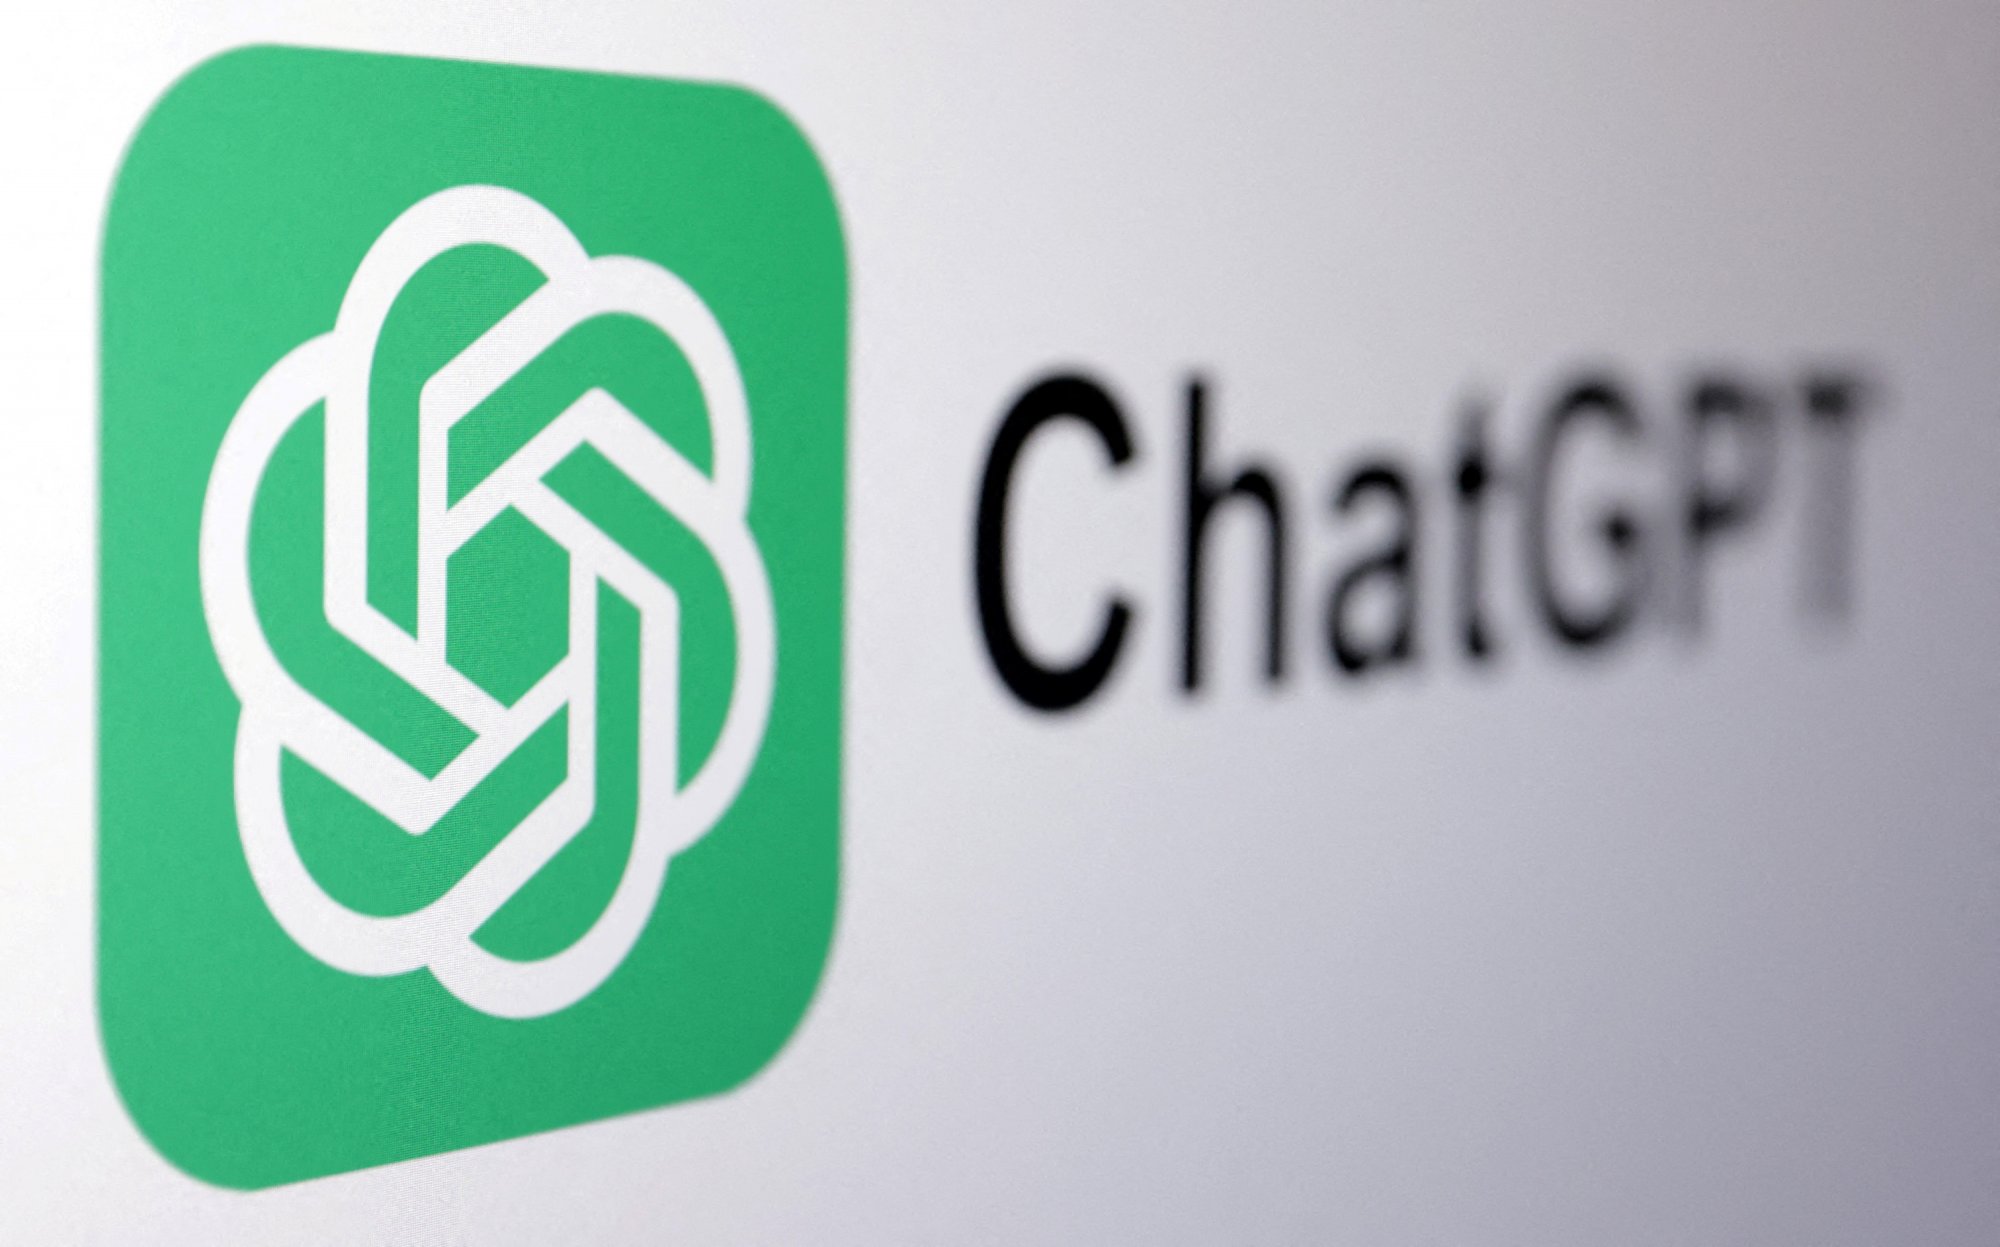 ChatGPT: Το chatbot αποκτά πρόσβαση στη Wall Street Journal και τους Times